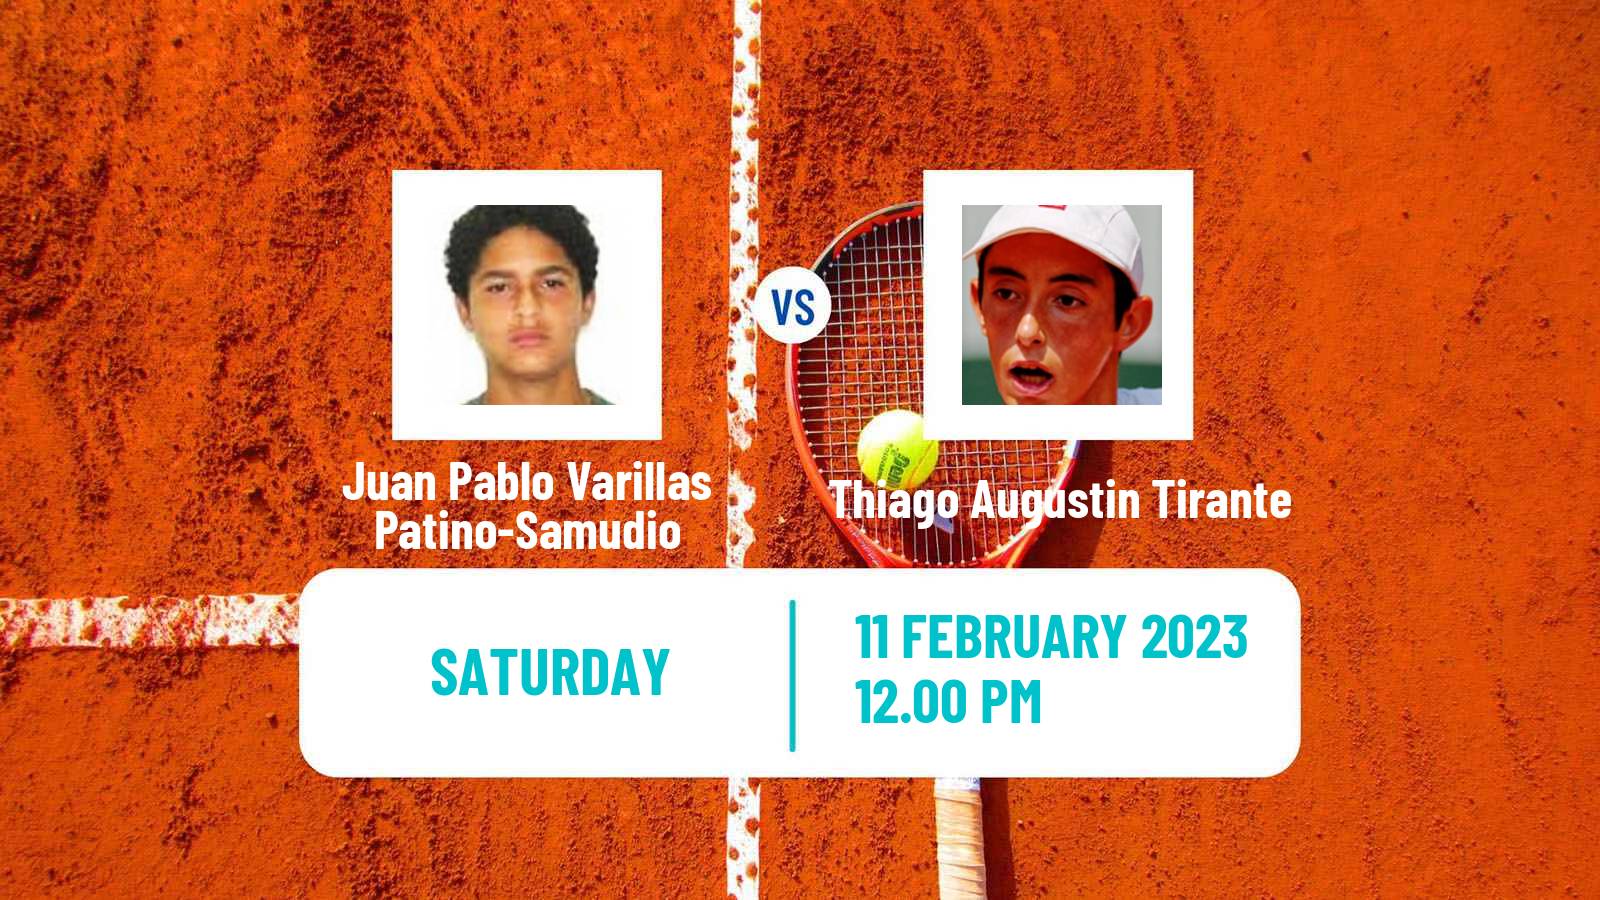 Tennis ATP Buenos Aires Juan Pablo Varillas Patino-Samudio - Thiago Augustin Tirante